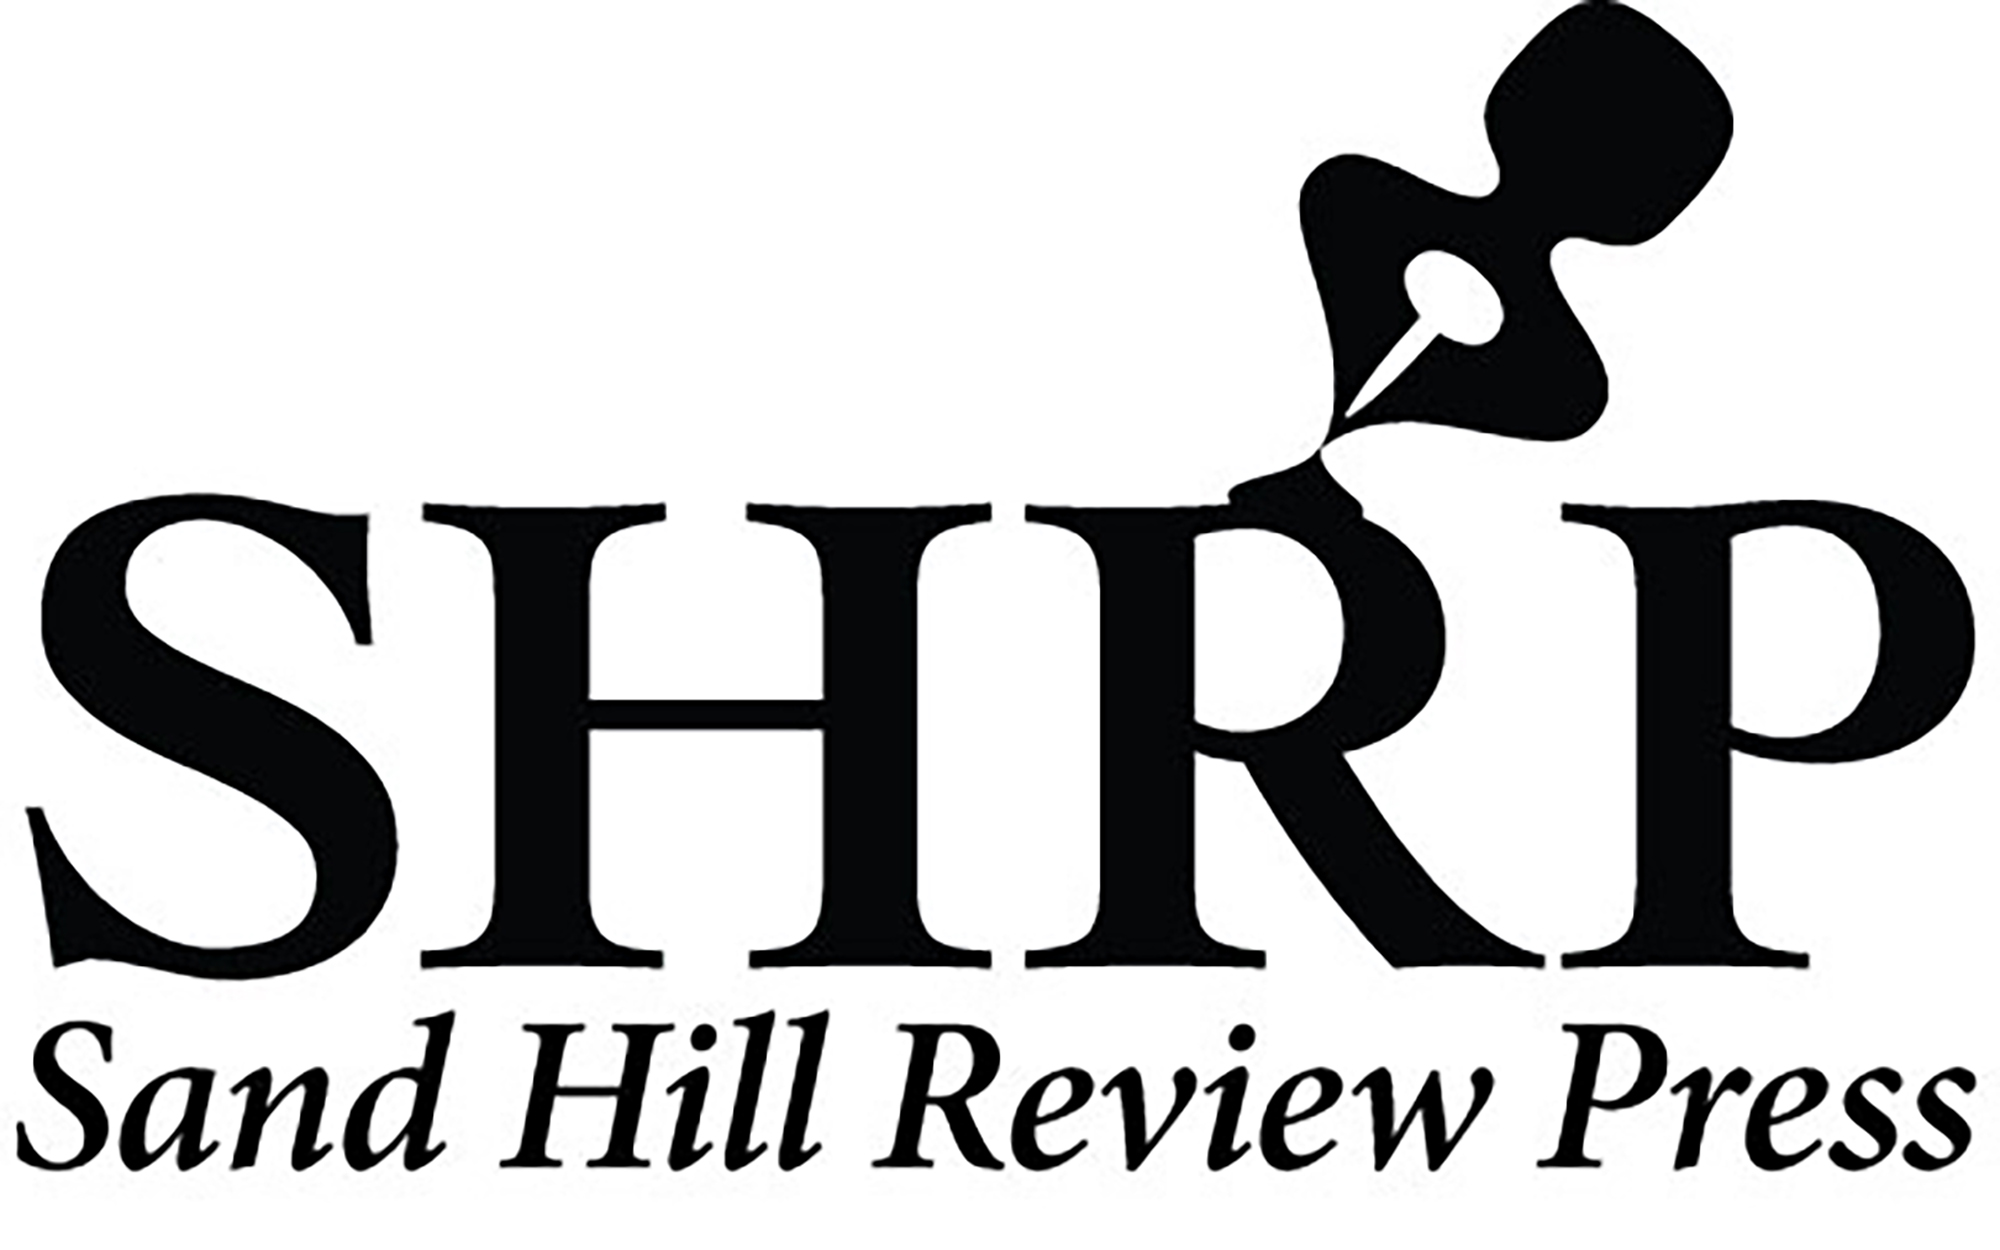 Sand Hill Review Press, LLC